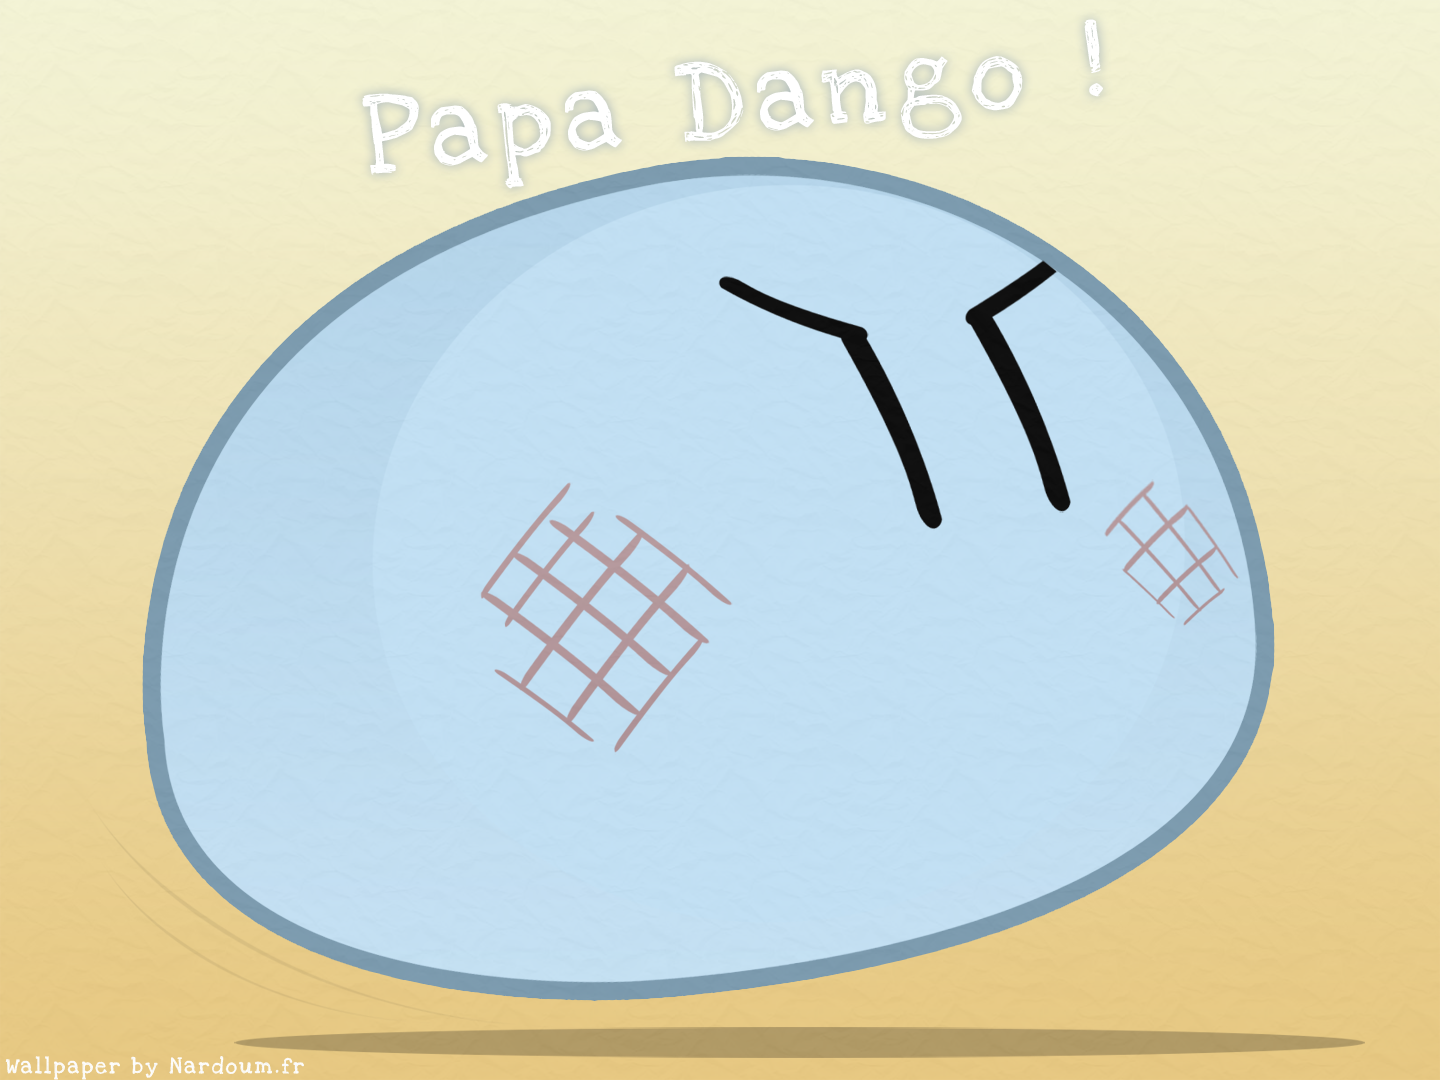 Papa Dango by Nardoum on DeviantArt